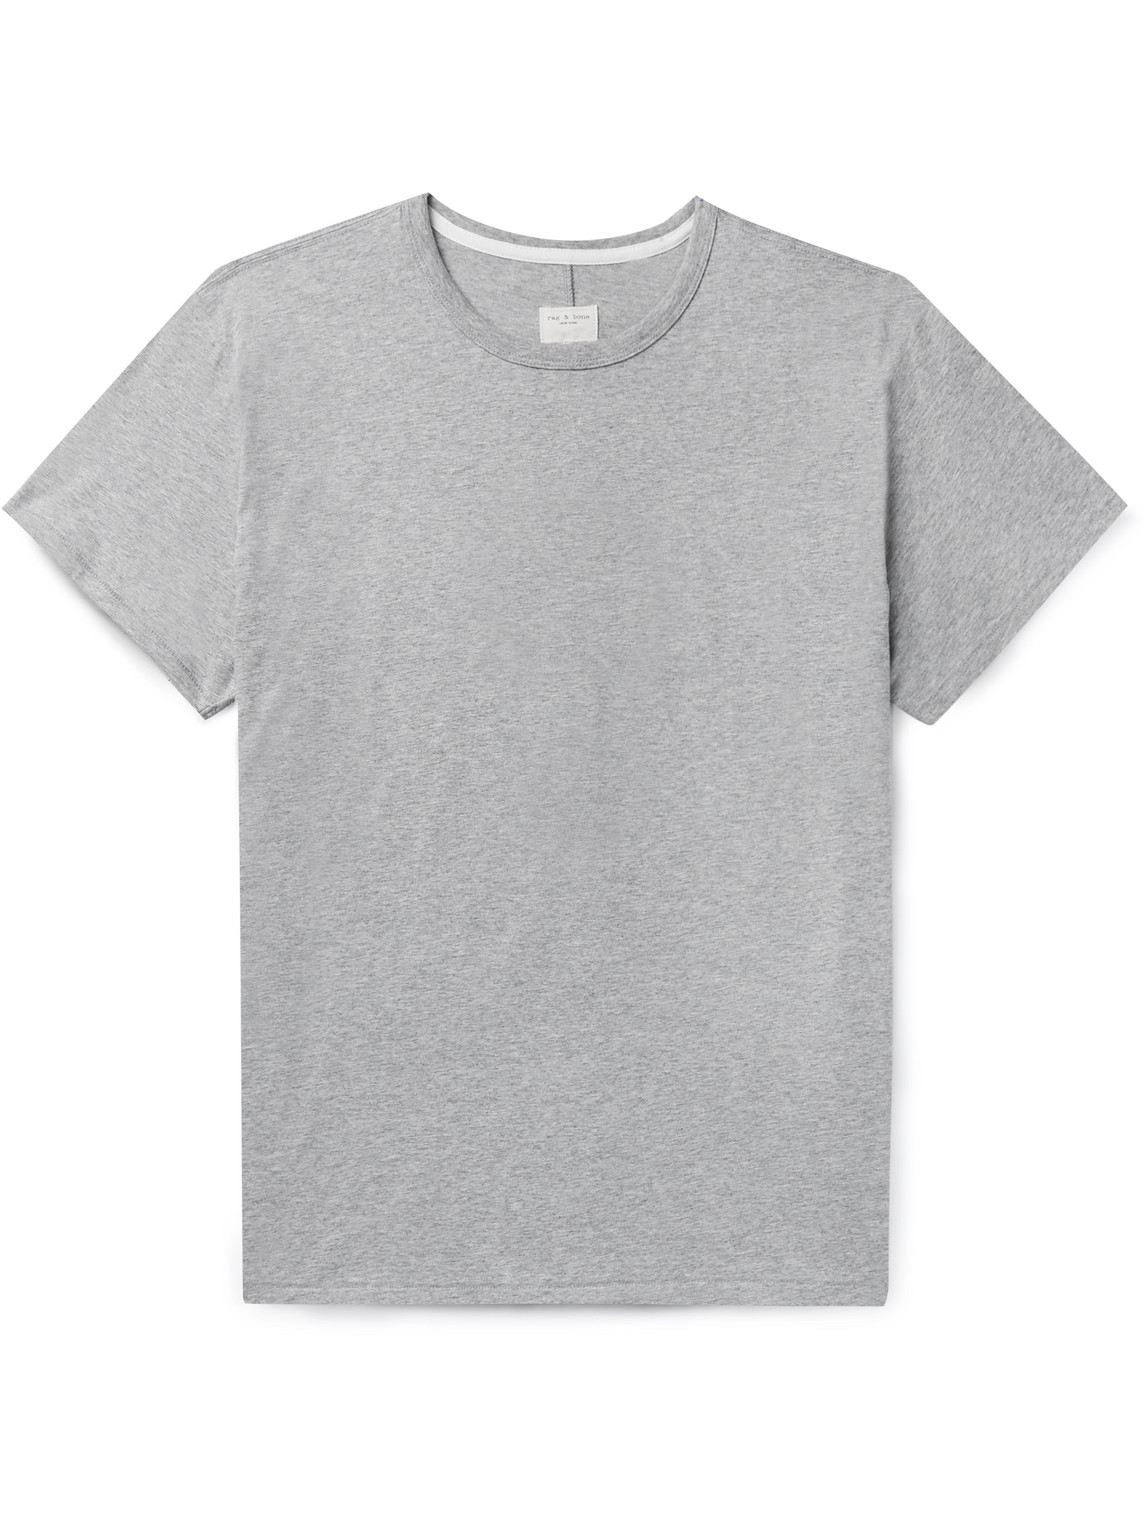 Mélange Organic Cotton-Jersey T-Shirt